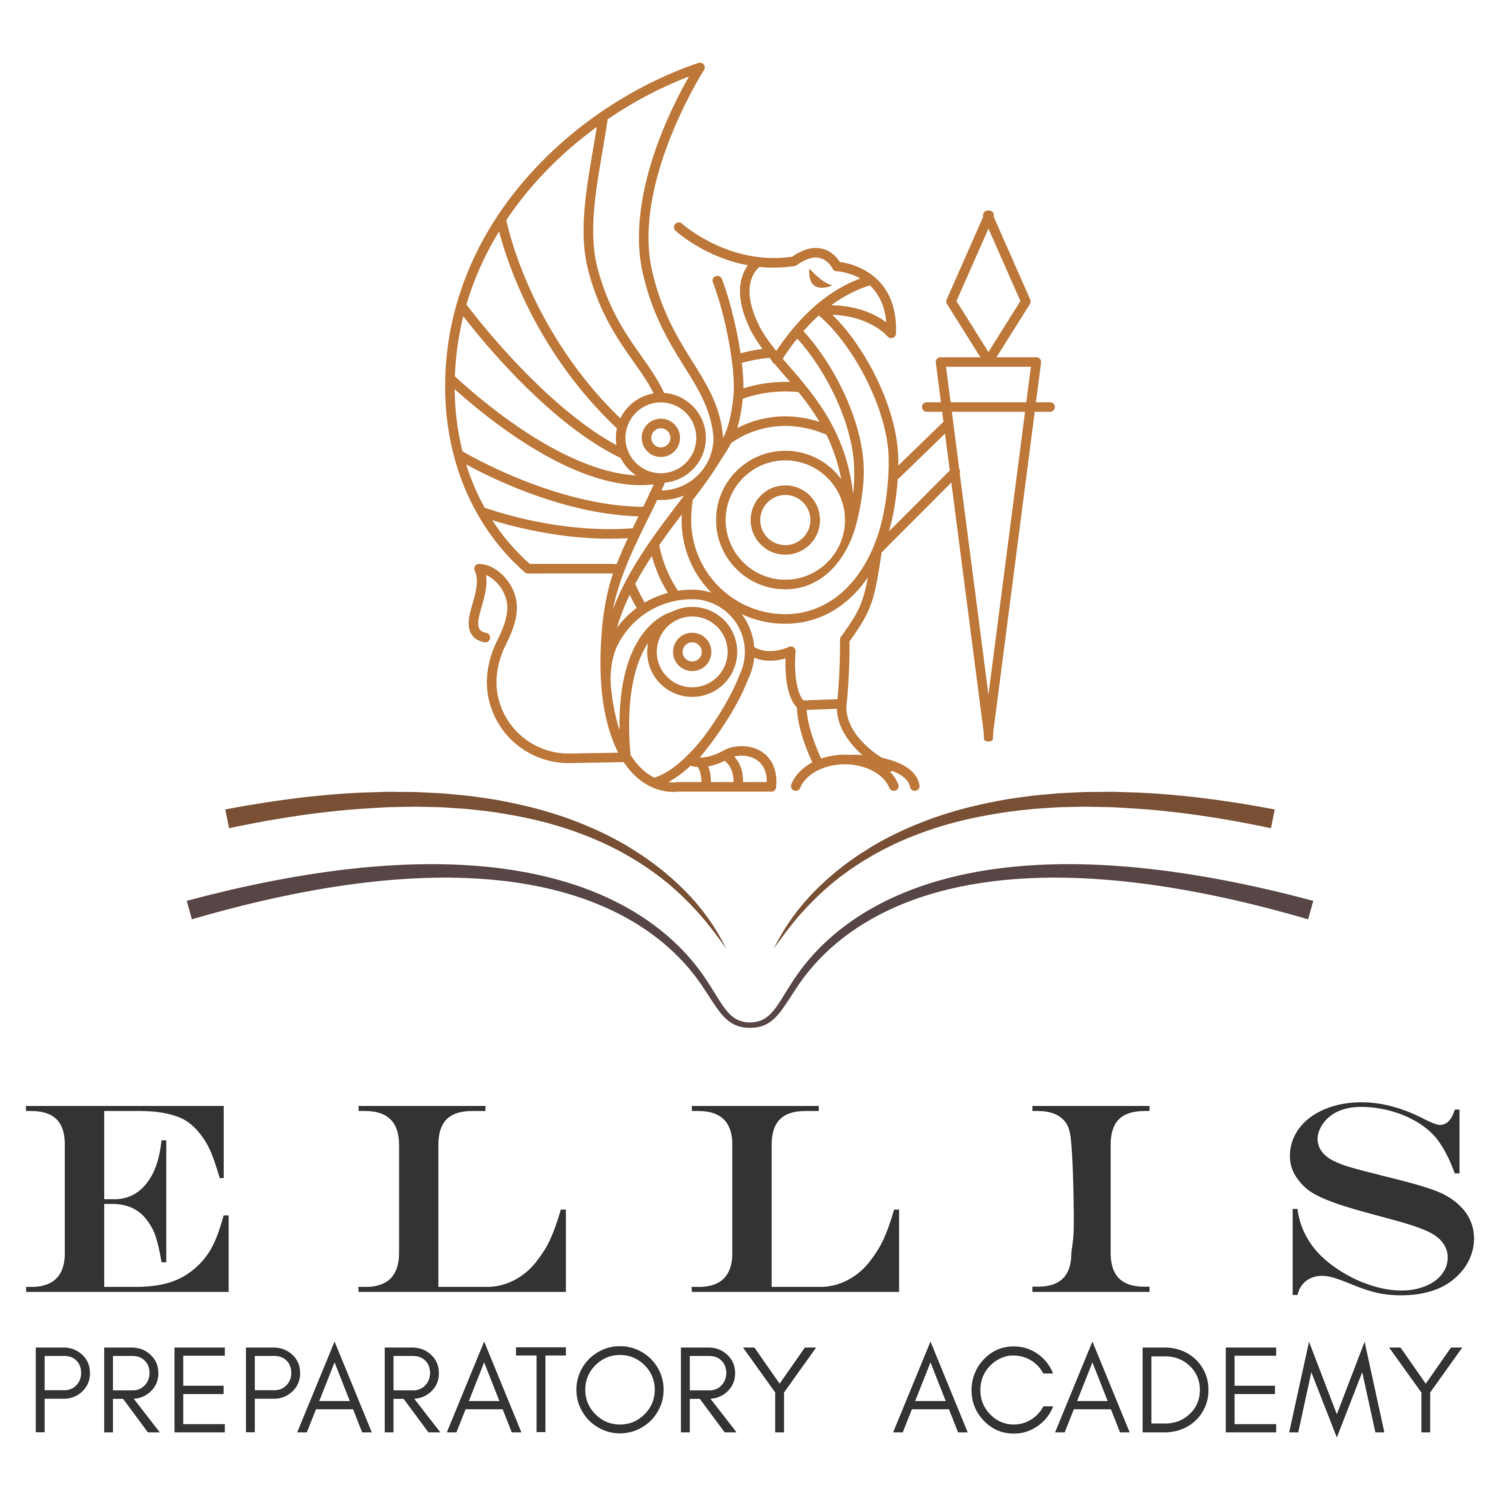 Ellis Prep. Academy